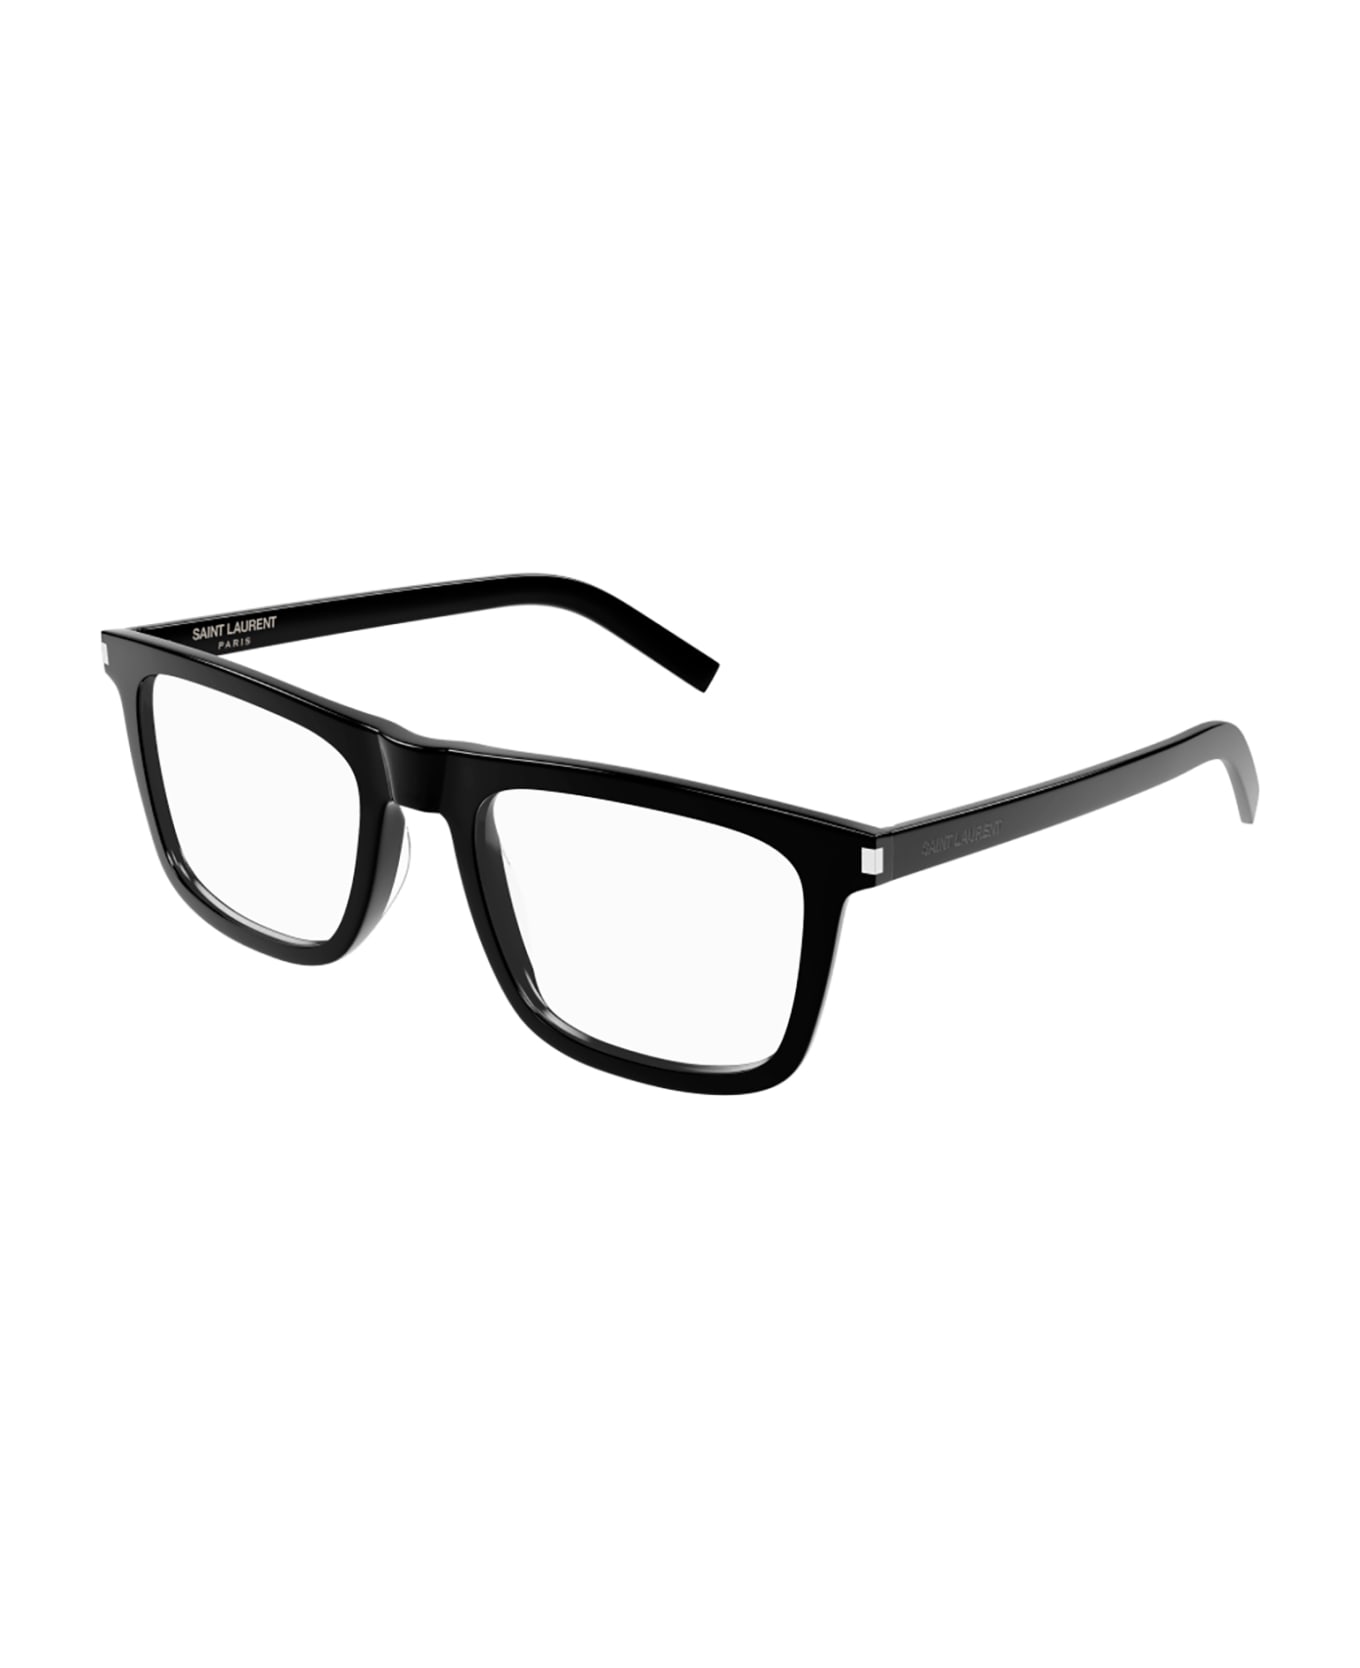 Saint Laurent Eyewear SL 547 SLIM OPT Eyewear - Black Black Transpare